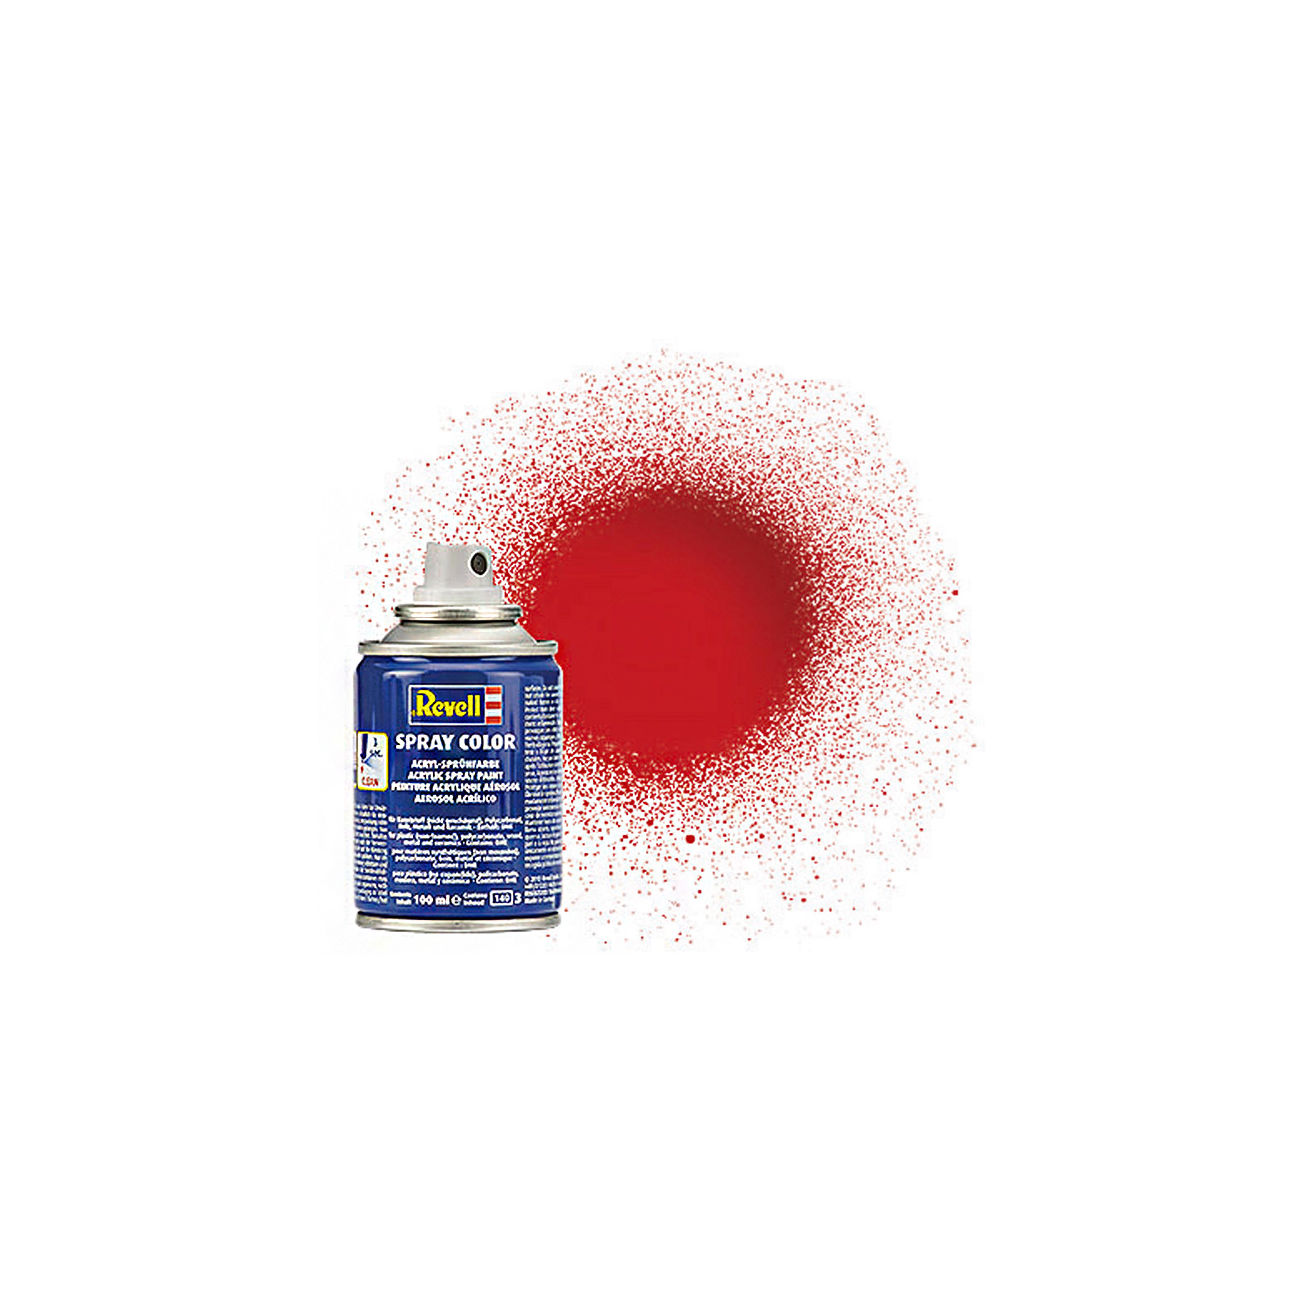 Revell Acryl Spray Color Sprhdose Feuerrot glnzend 100ml 34131